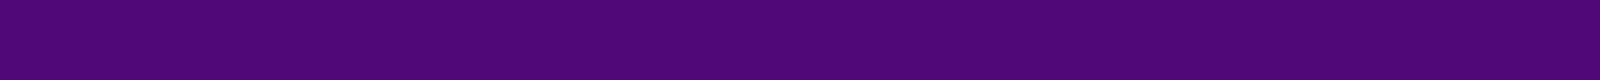 Purple banner